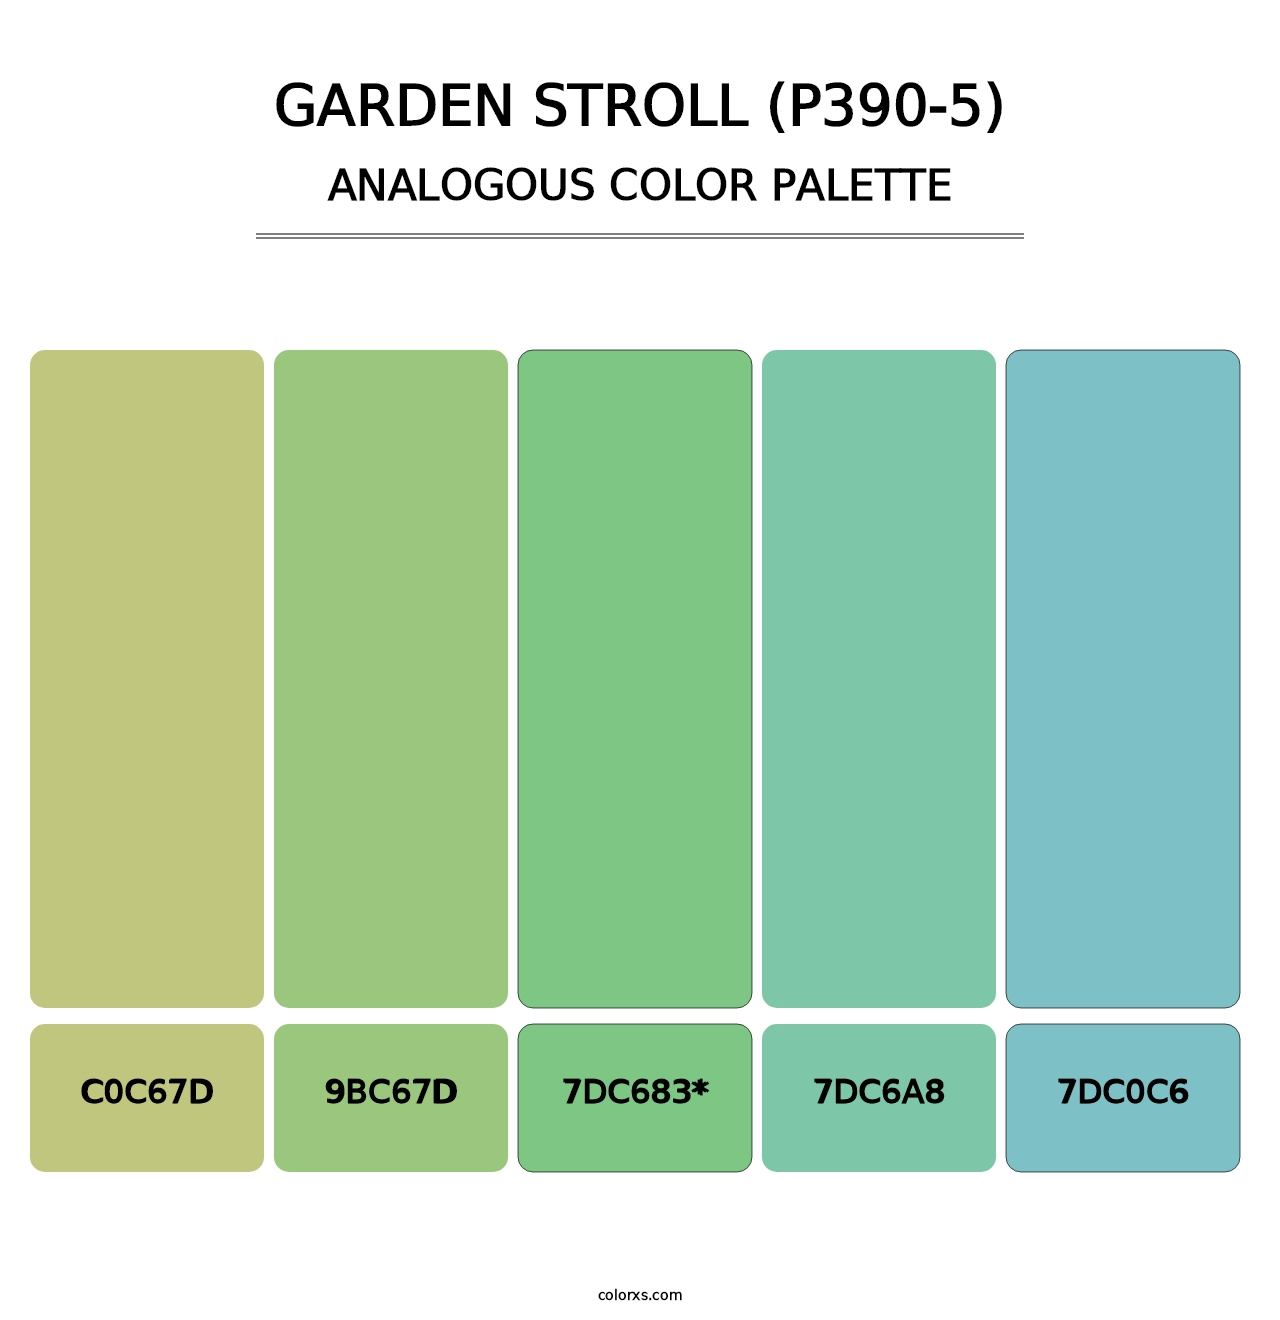 Garden Stroll (P390-5) - Analogous Color Palette